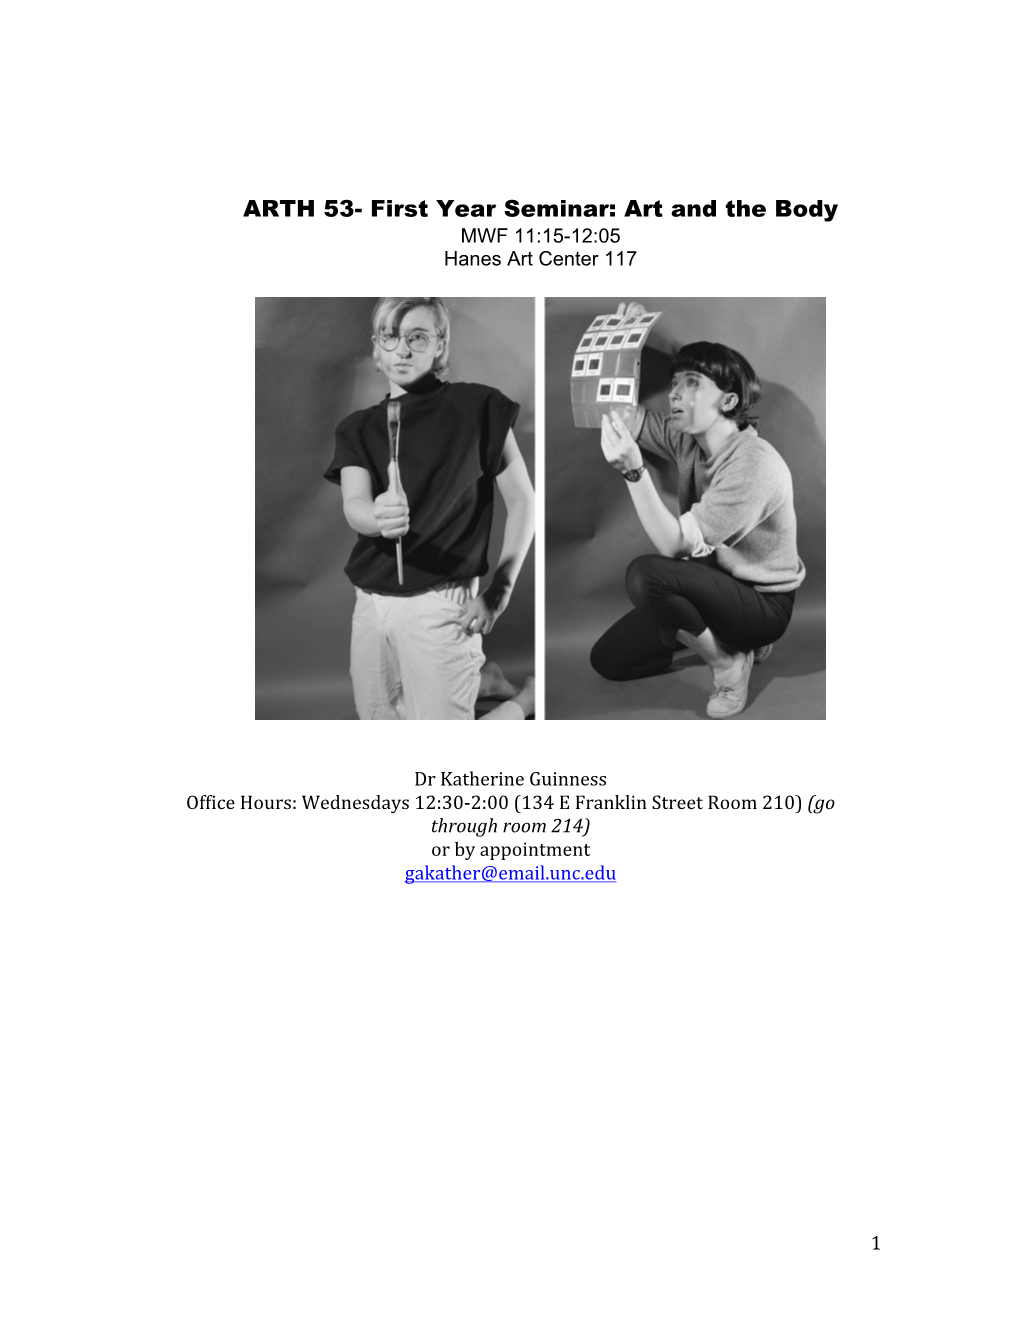 Art and the Body MWF 11:15-12:05 Hanes Art Center 117